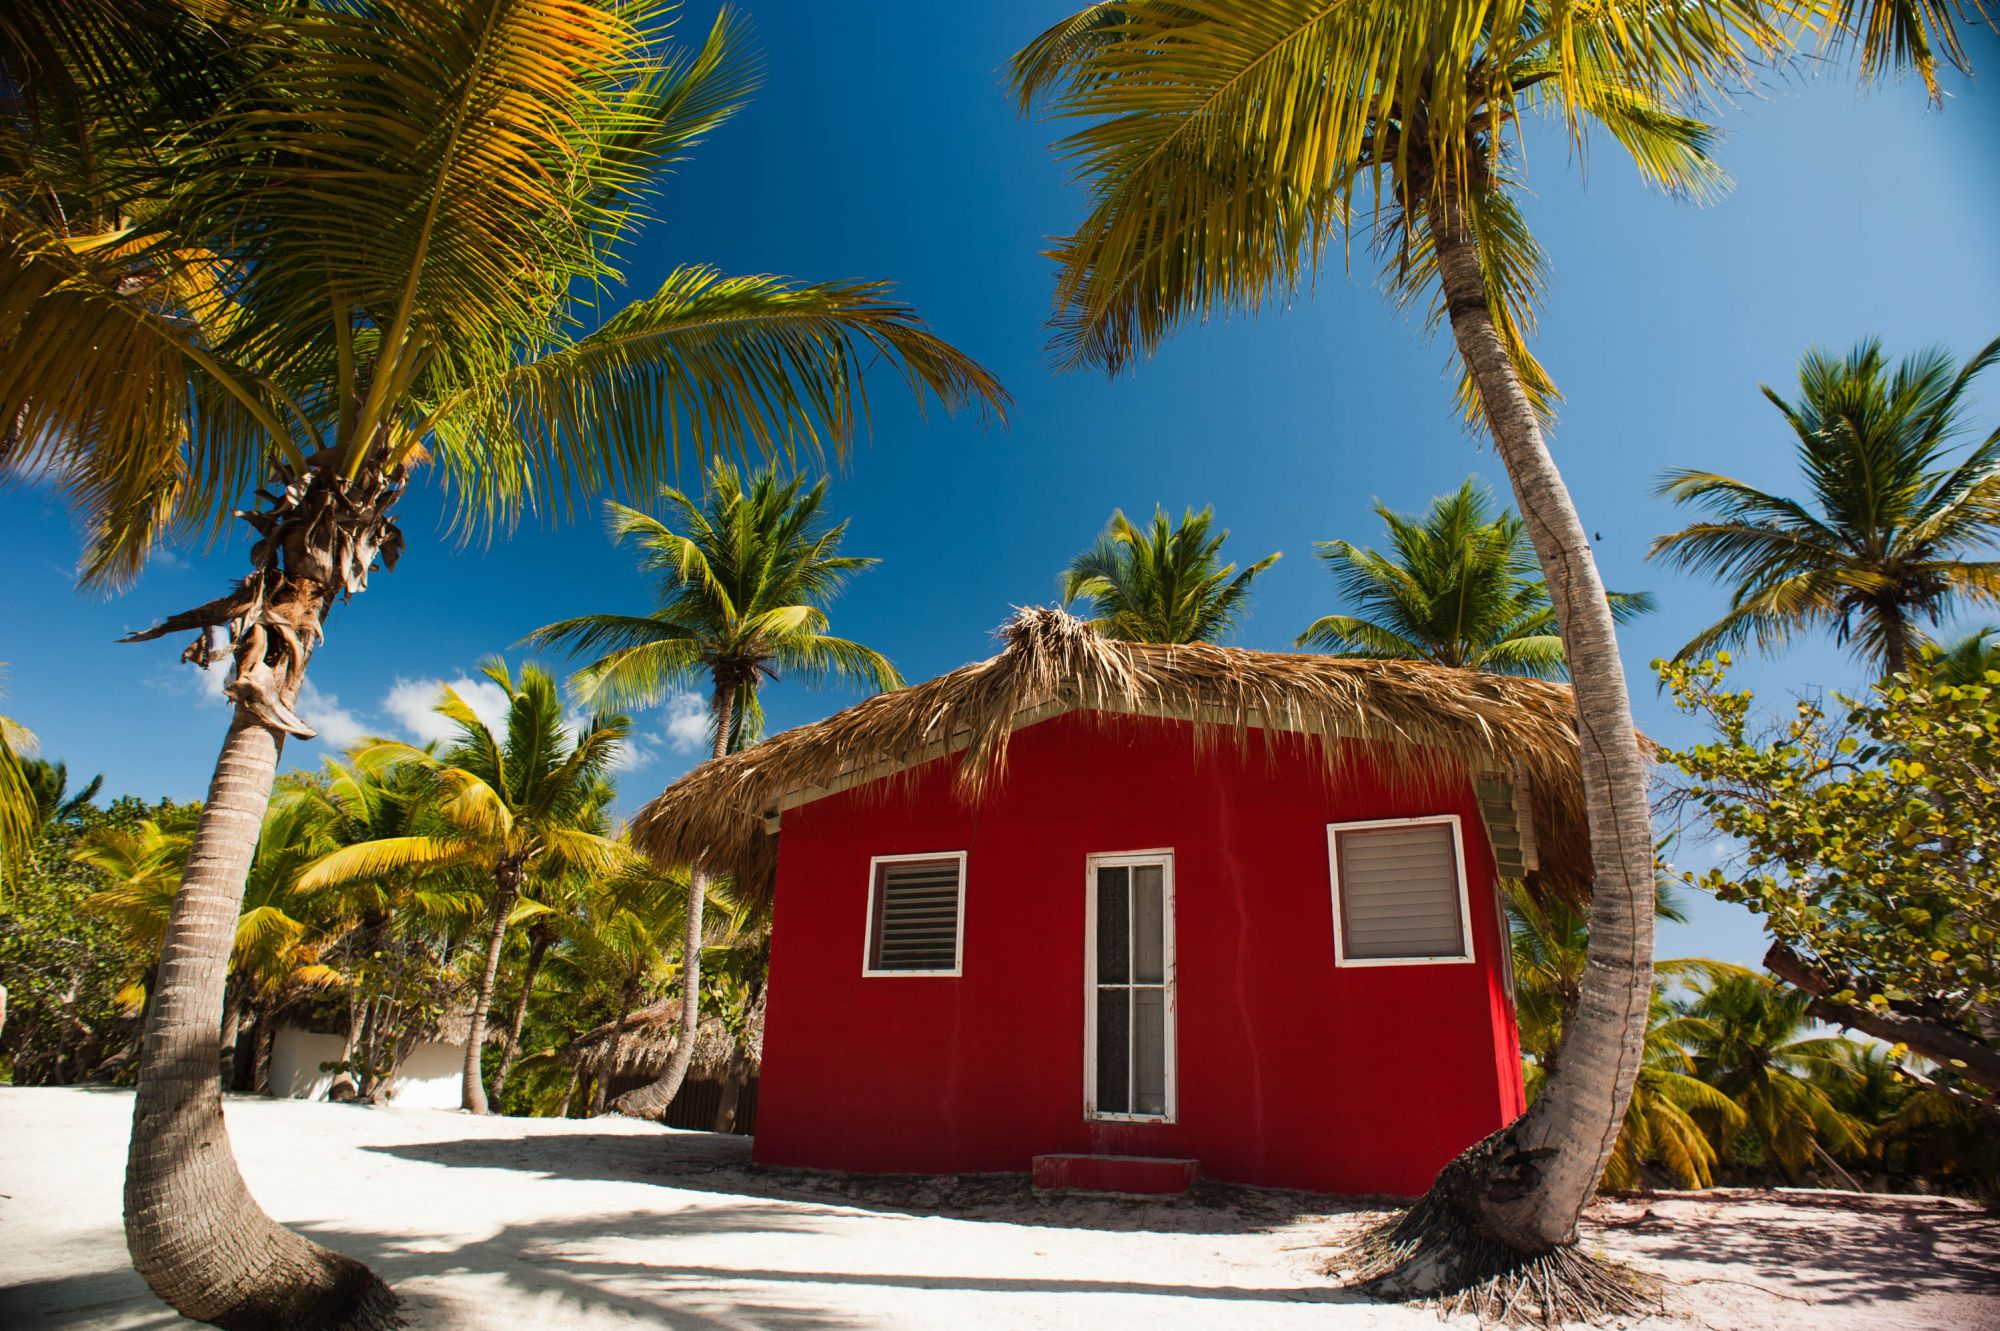 files/Rozdilu/Goteli Krajin/Dominicana/Banner/Catalina_Island,_La_Romana,_Dominican_Republic._A_typical_bungalow_nearby_cost_line,_shaded_with_palm_trees_(1).jpg